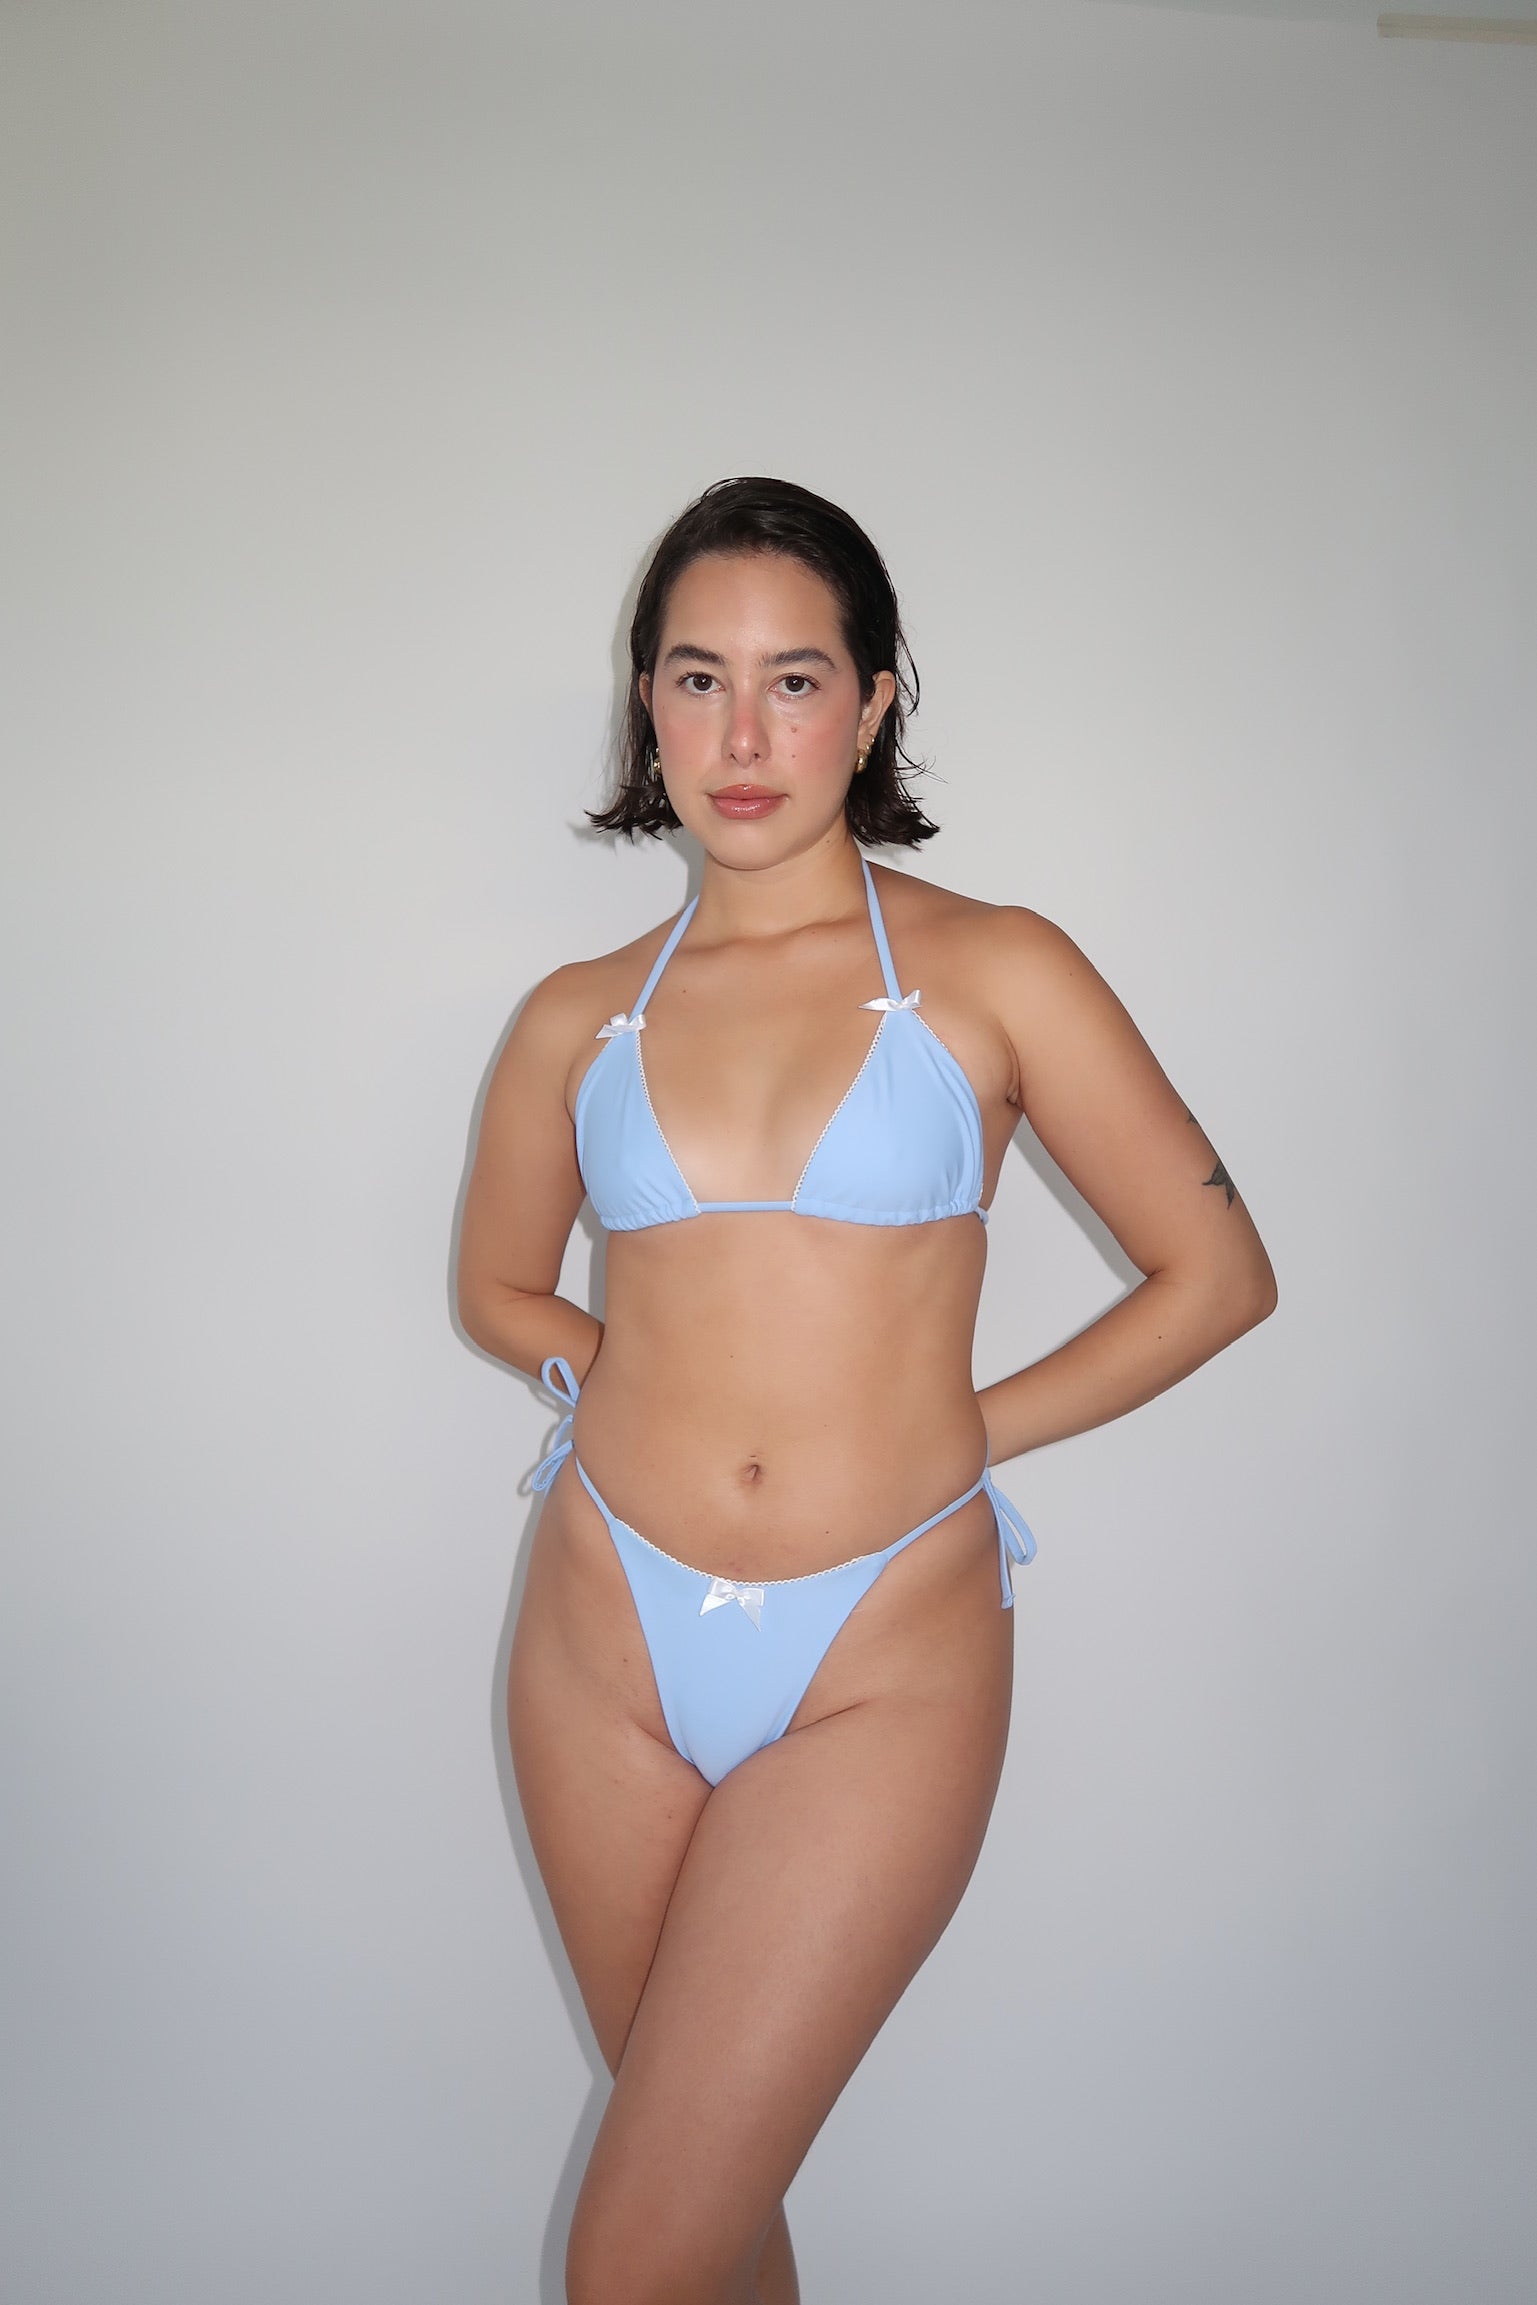 Pretty teenage girl wearing blue bikini in front of white